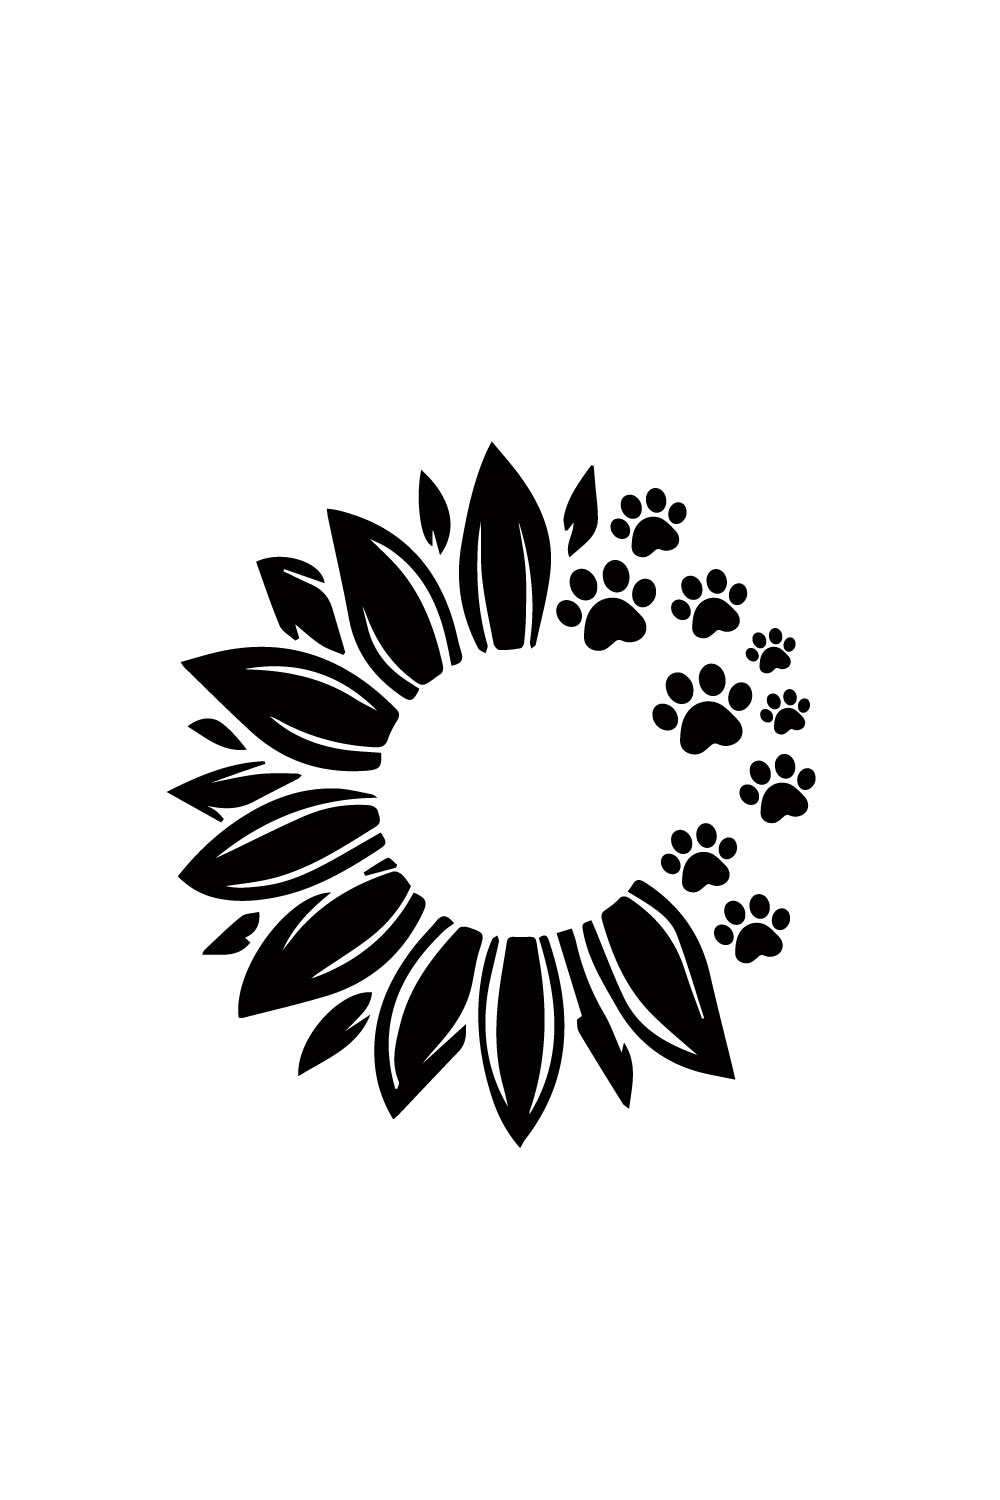 Free Sun flower logo pinterest preview image.